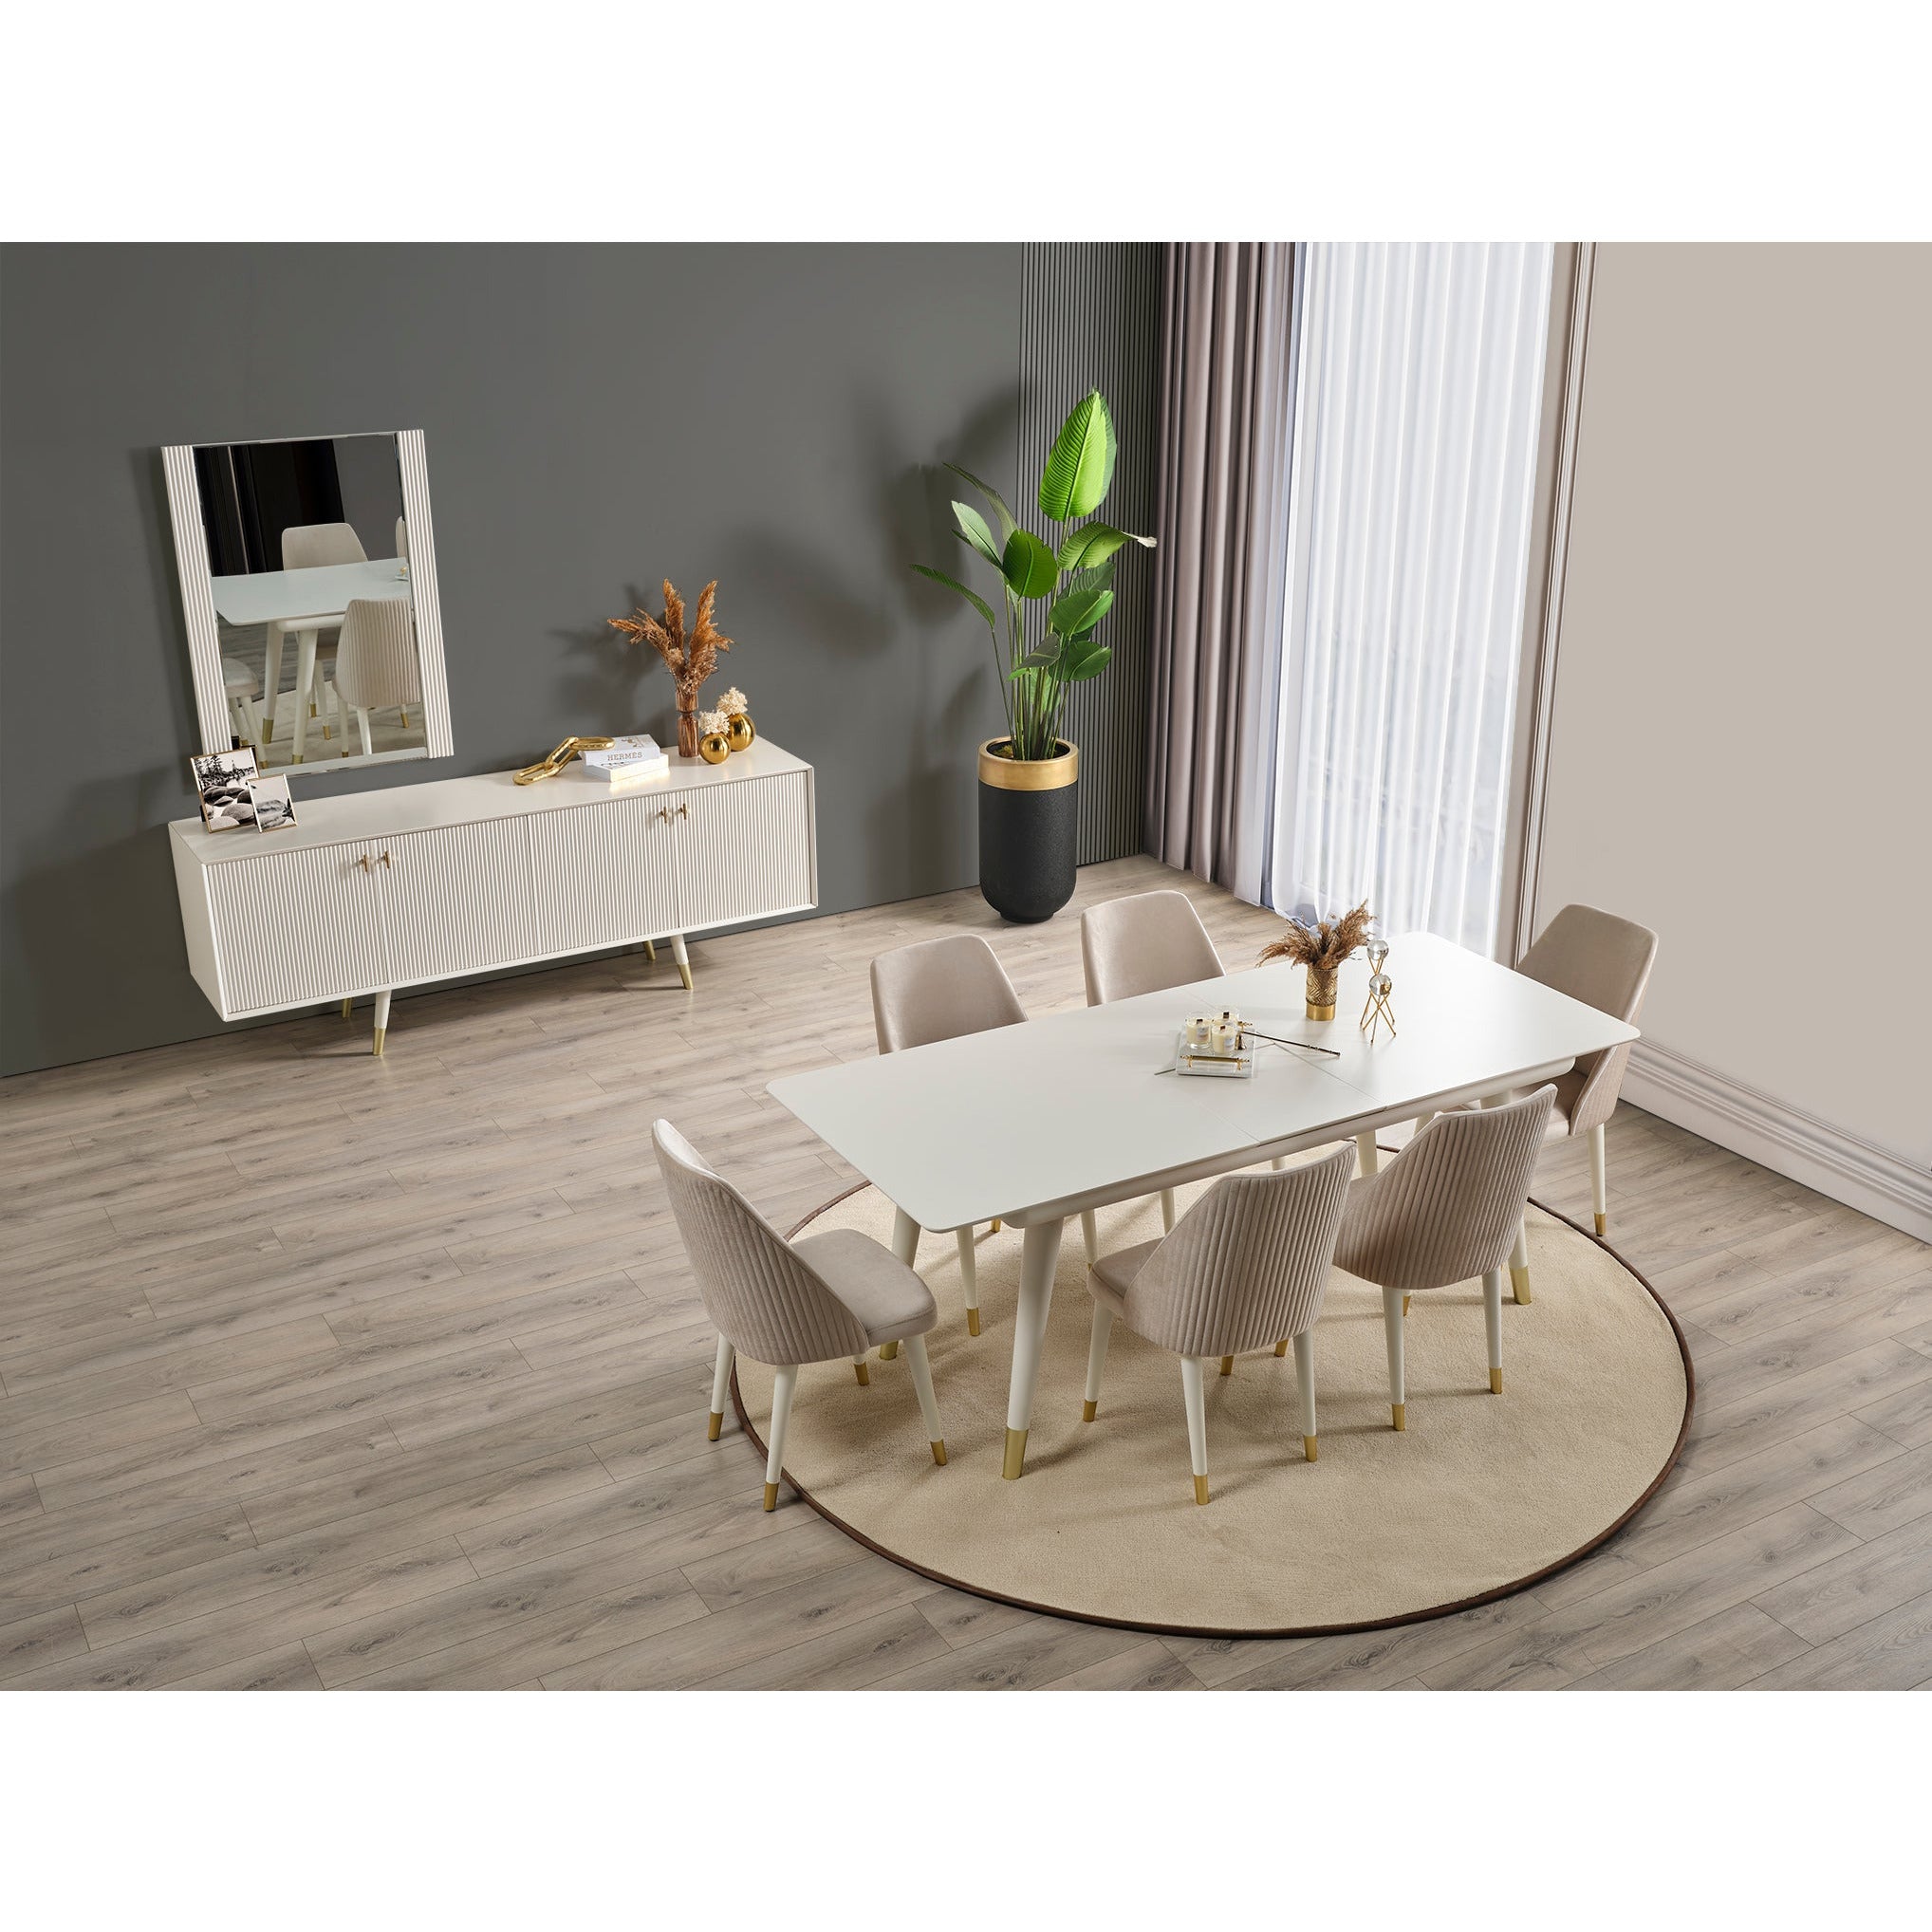 Asra Skänk med Spegel - LINE Furniture Group